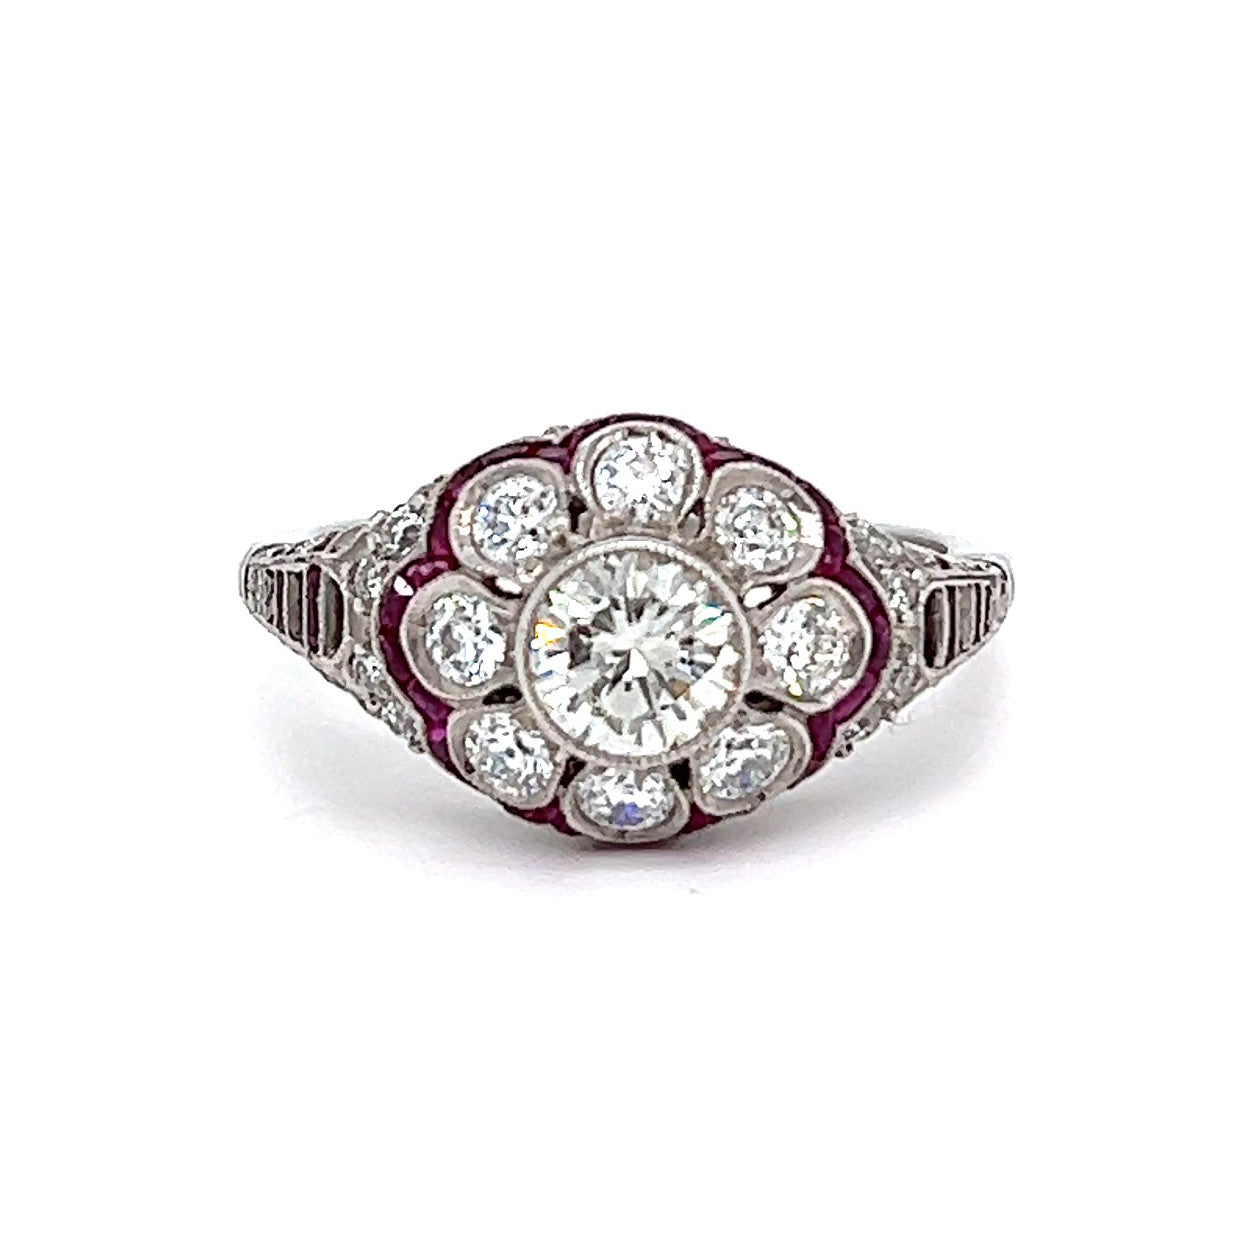 Art Deco Inspired 0.52 Carat Brilliant Cut Diamond Ruby Platinum Flower Filigree Ring